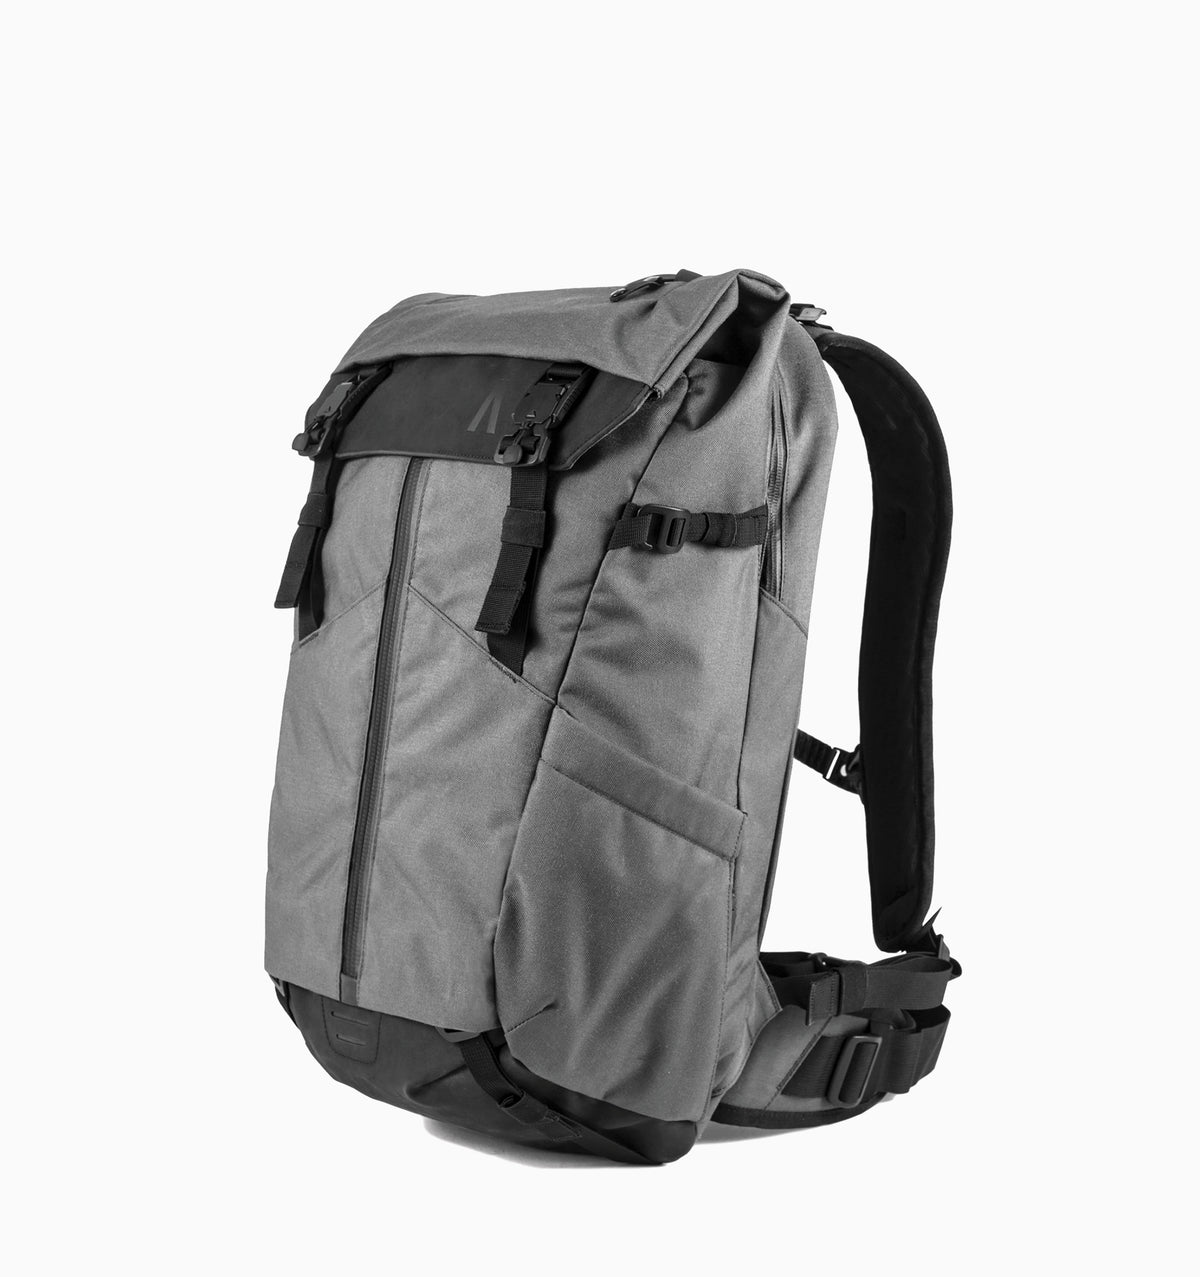 Boundary Supply Prima System Modular Travel Backpack 16" 38L - Stone Grey